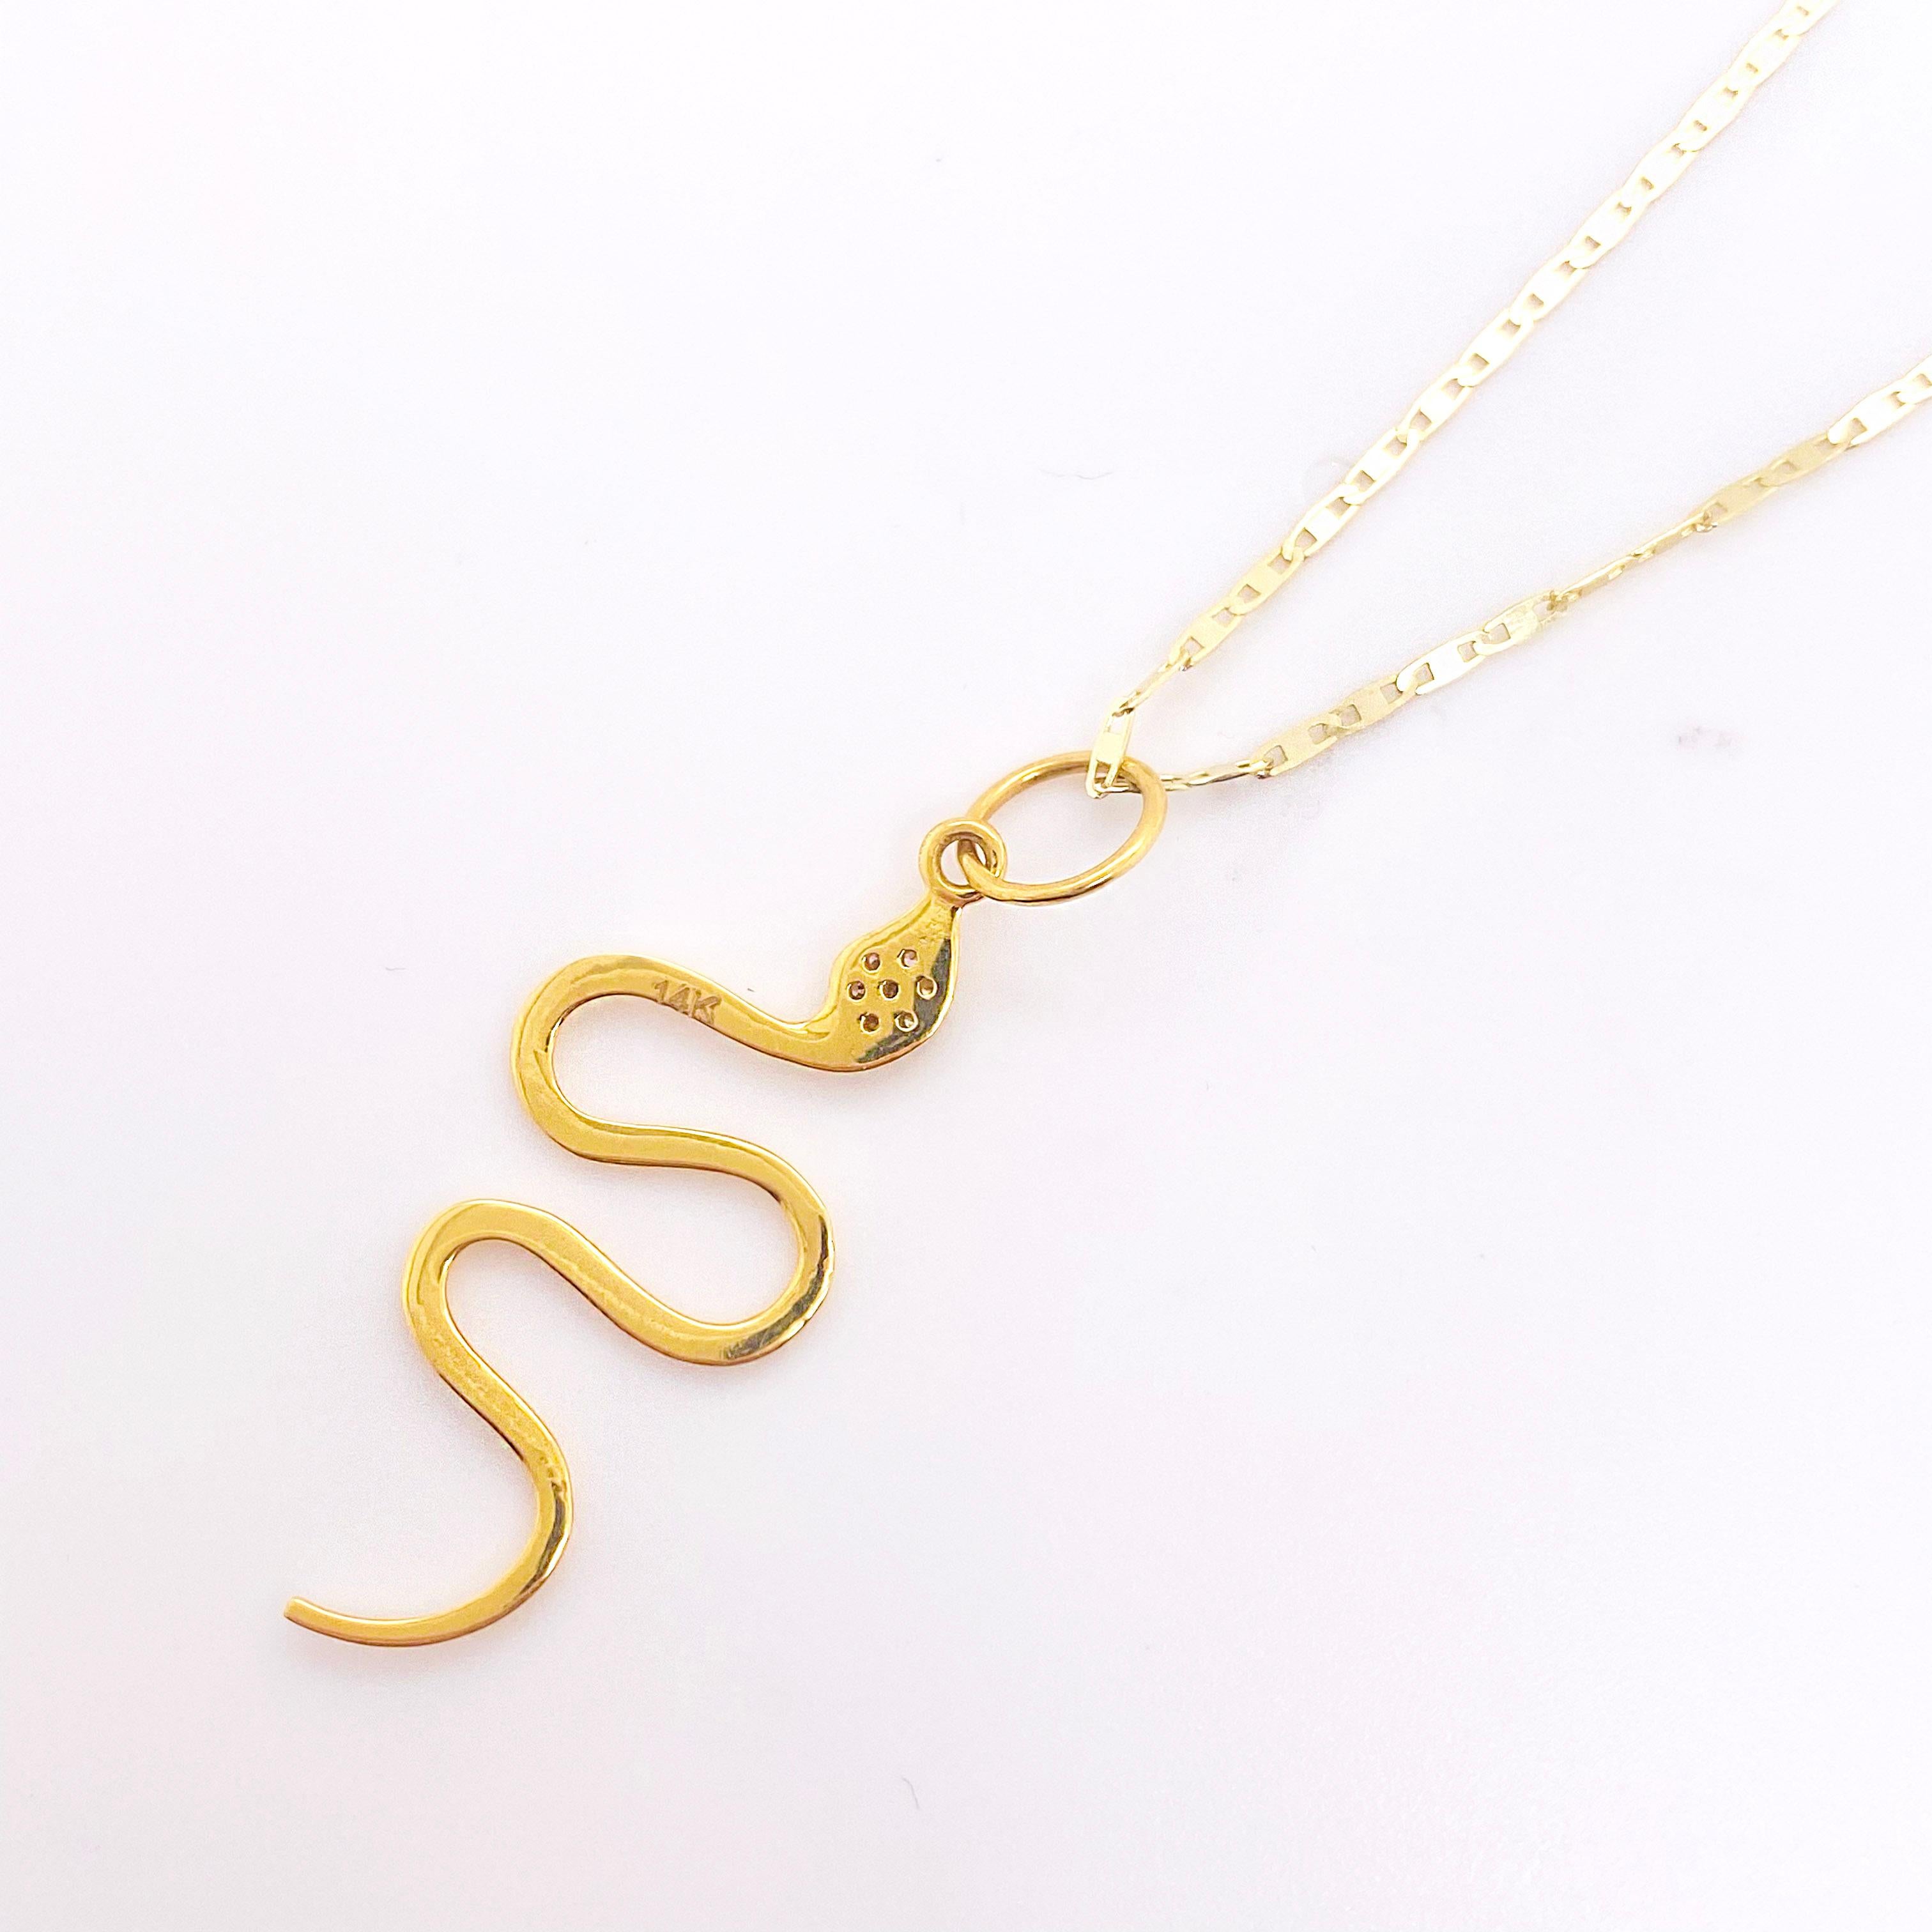 Round Cut Diamond Snake Necklace, Yellow Gold, Serpent Pendant Necklace, 7 Diamond Snake